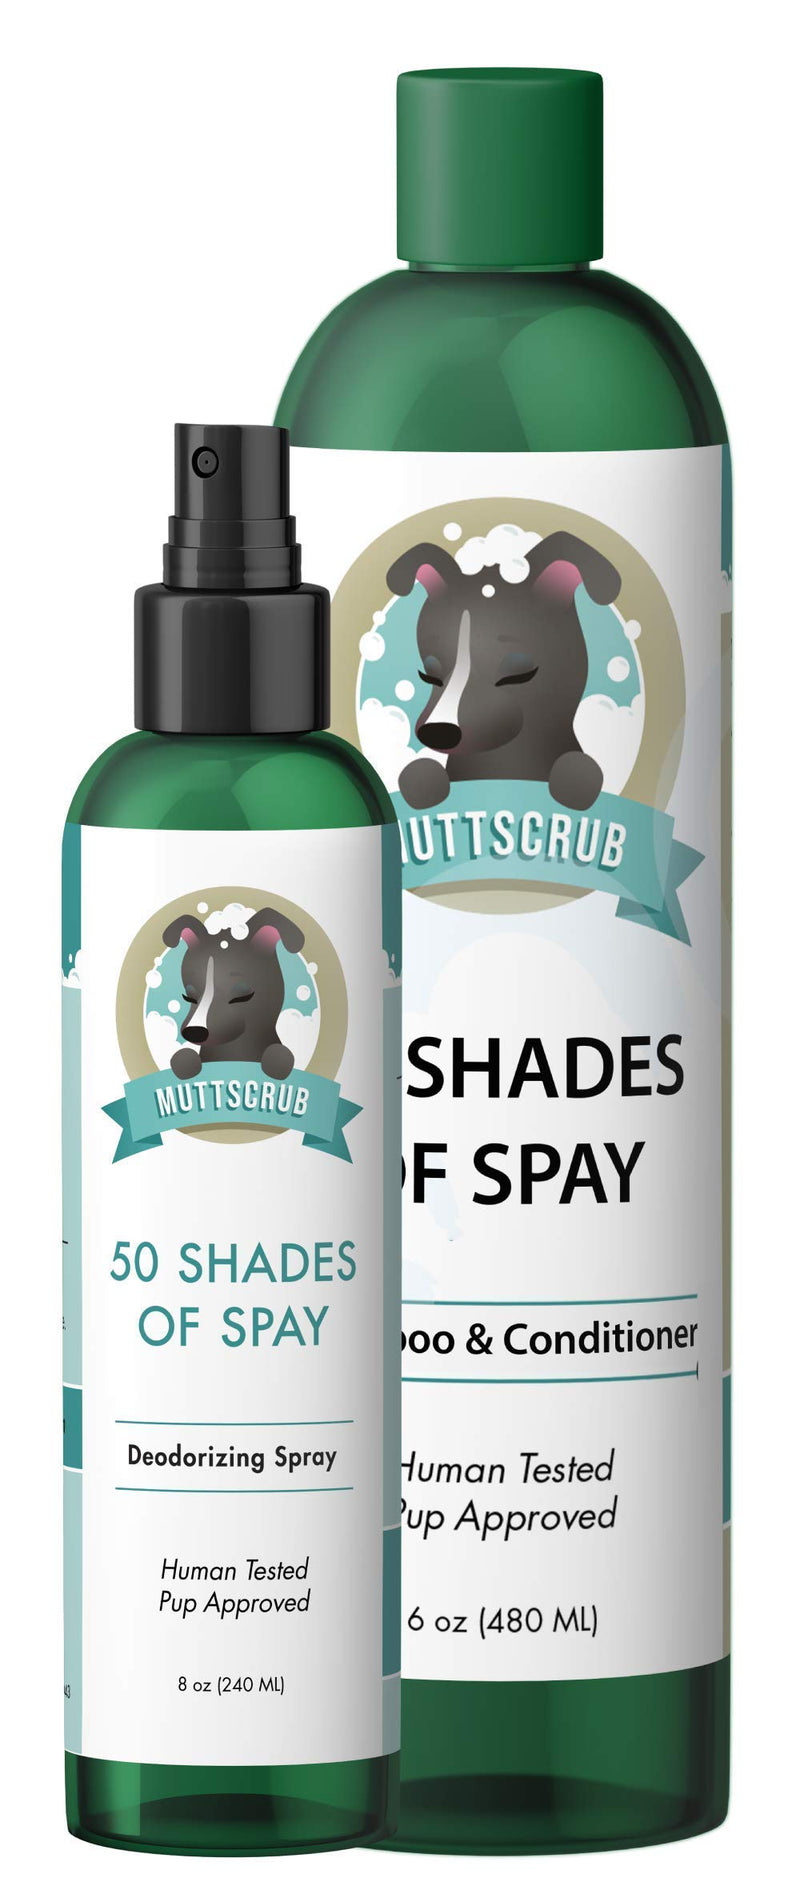 [Australia] - MuttScrub 50 Shades of Spay Kit for Dogs - Odor Neutralizing Dog Shampoo Kit, Bergamot Dog Shampoo All Natural Dog Shampoo 